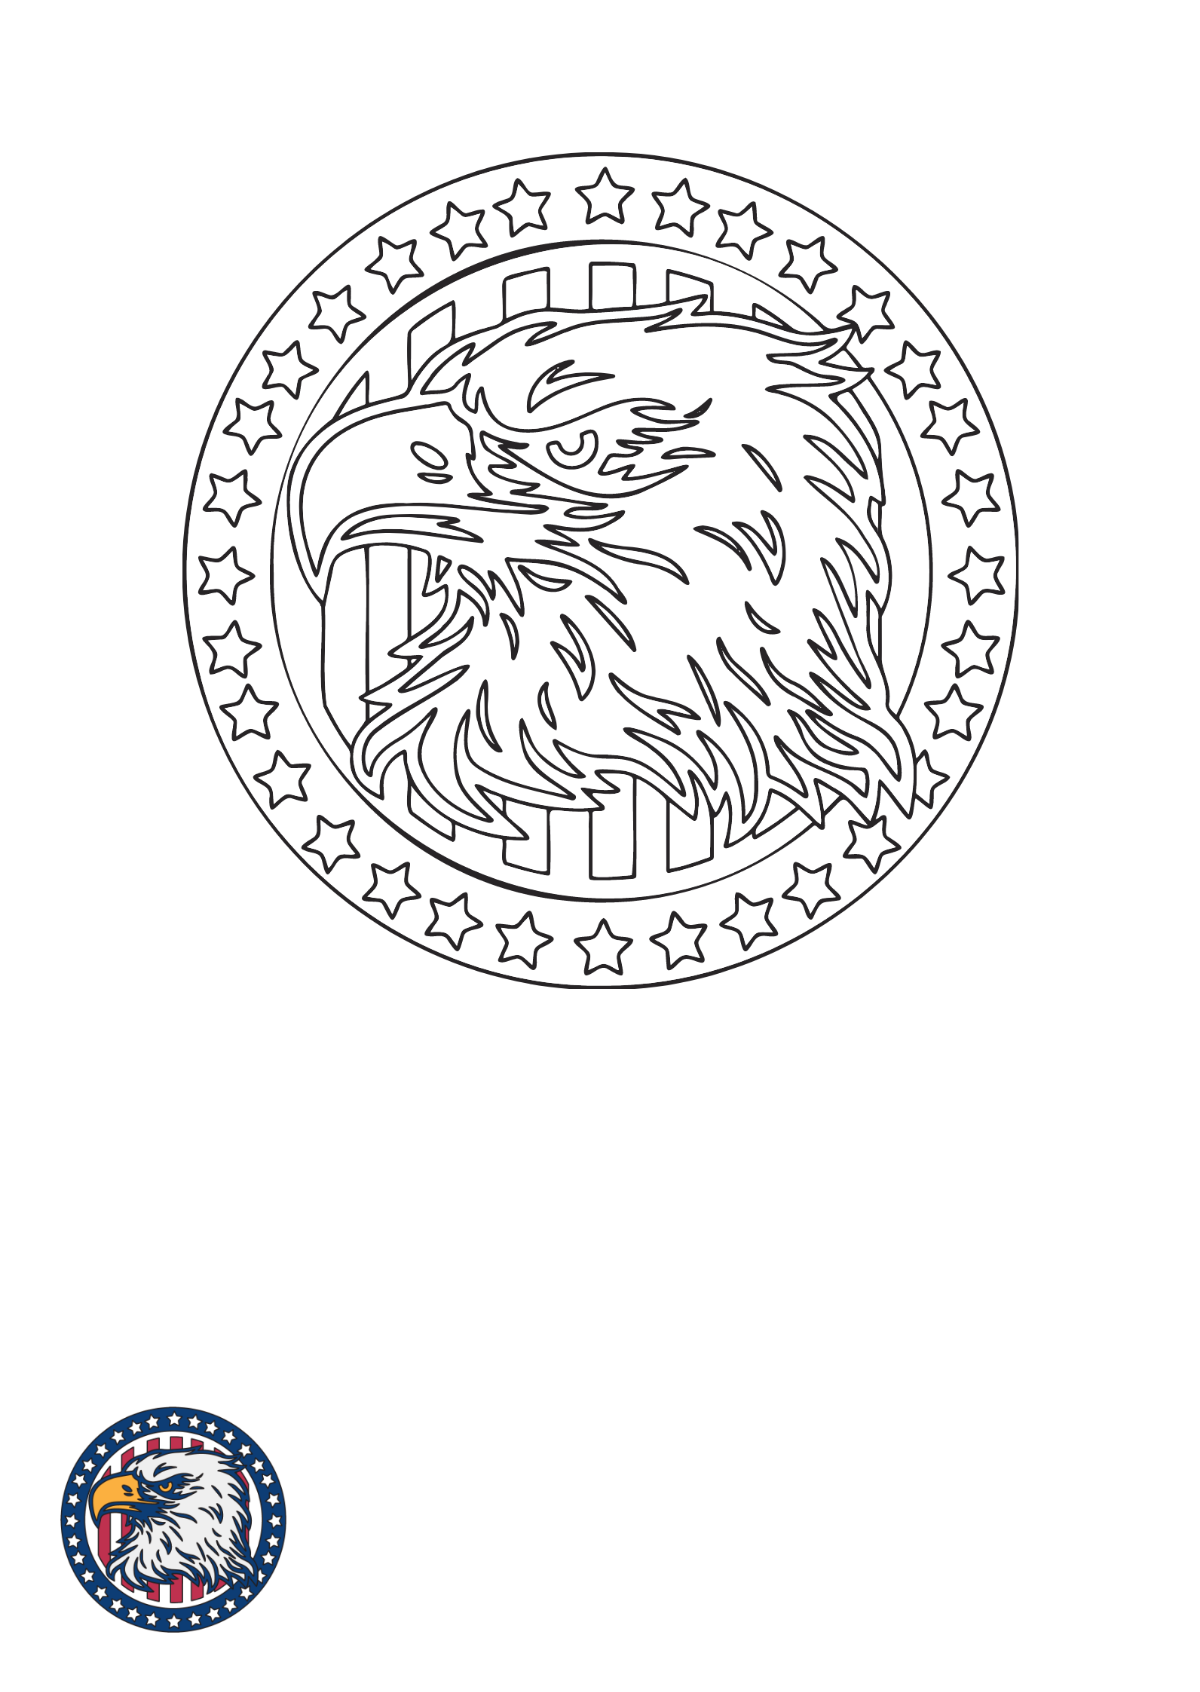 Patriotic Eagle coloring page Template